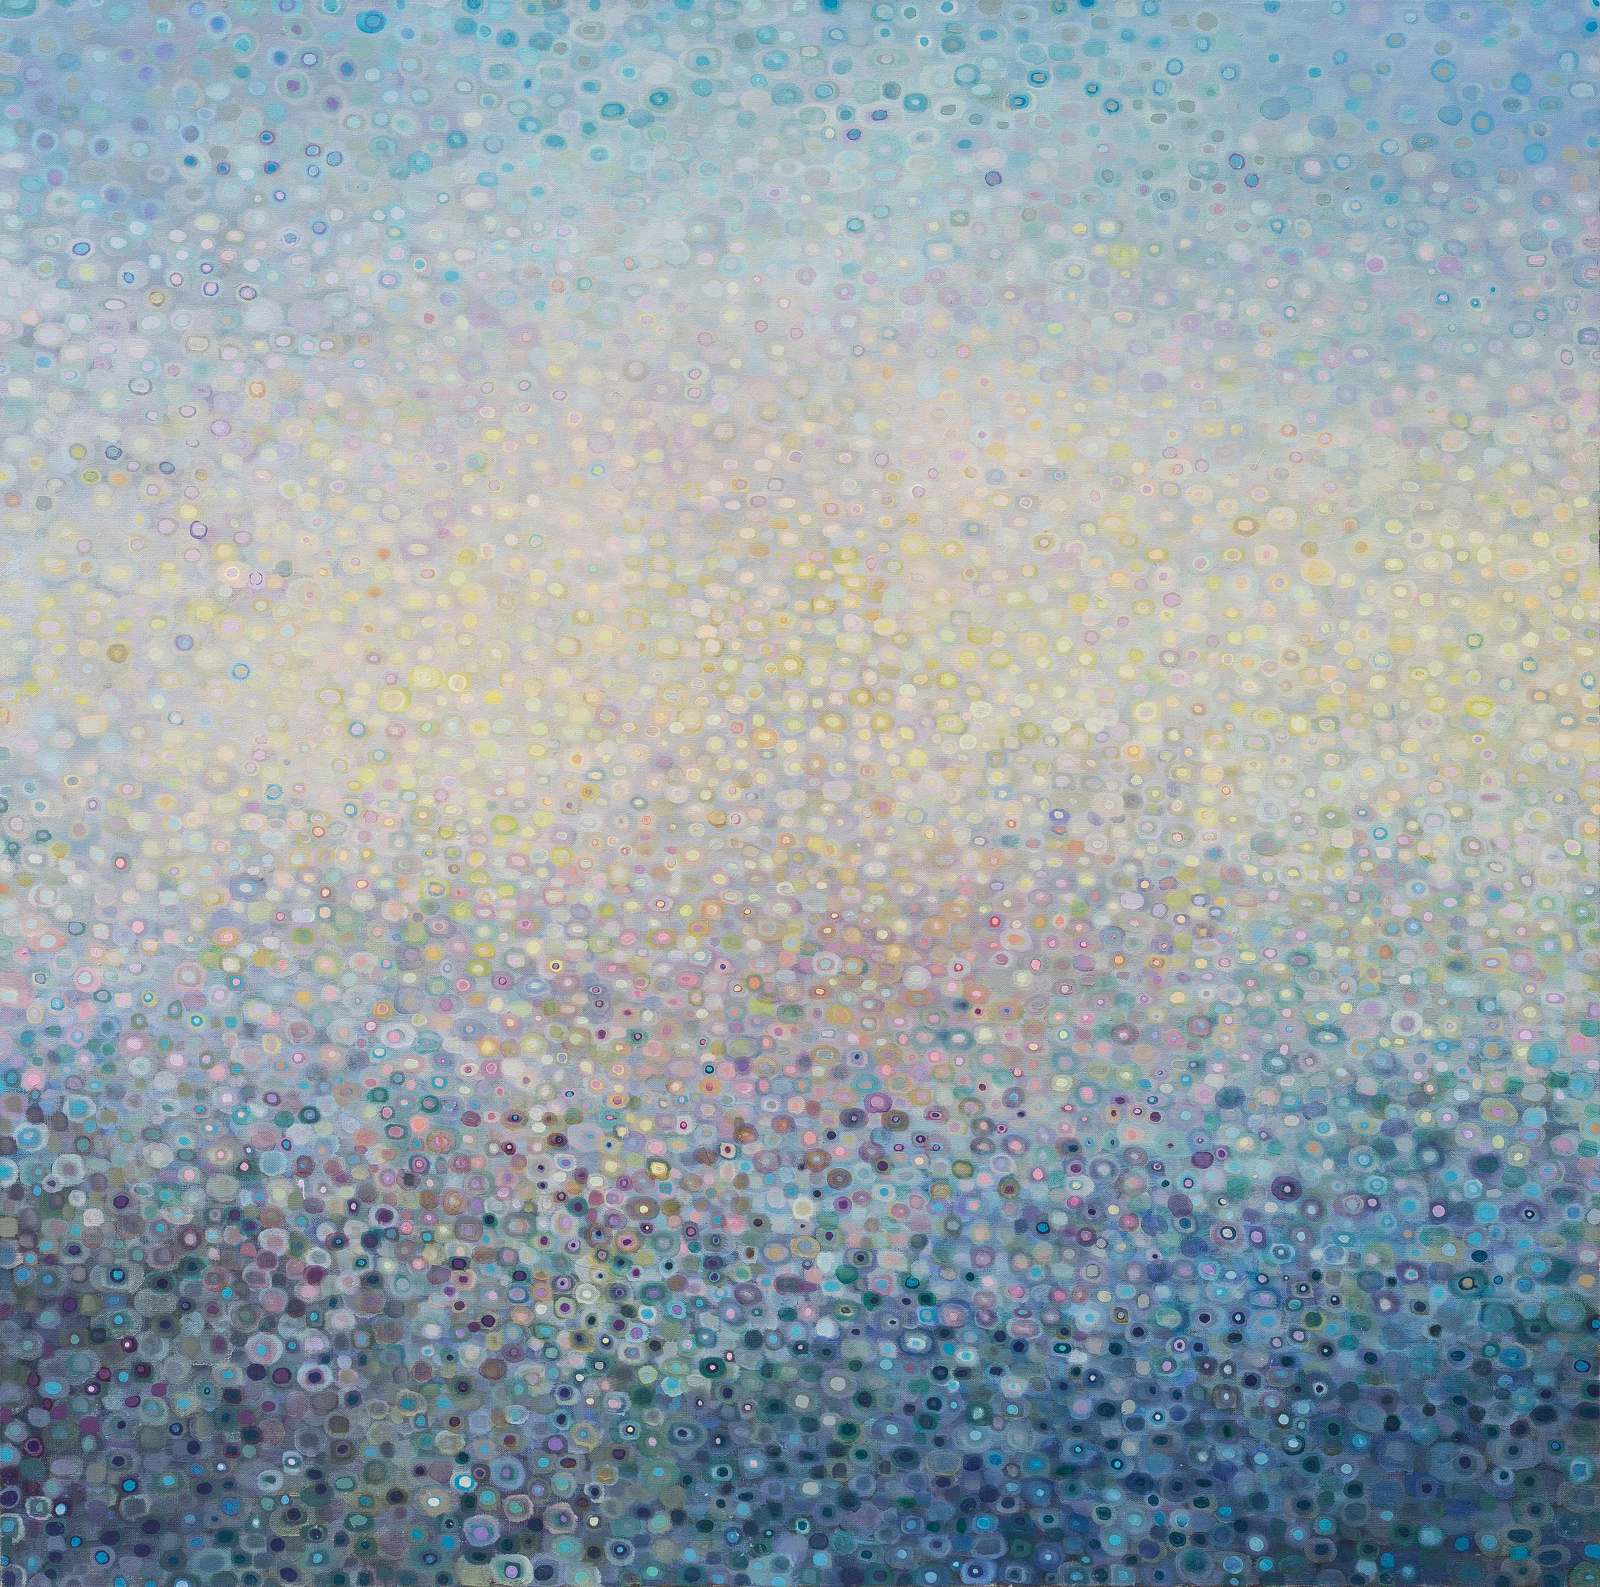  Luminescence No.11, 40" x 40", oil on canvas, 2017 